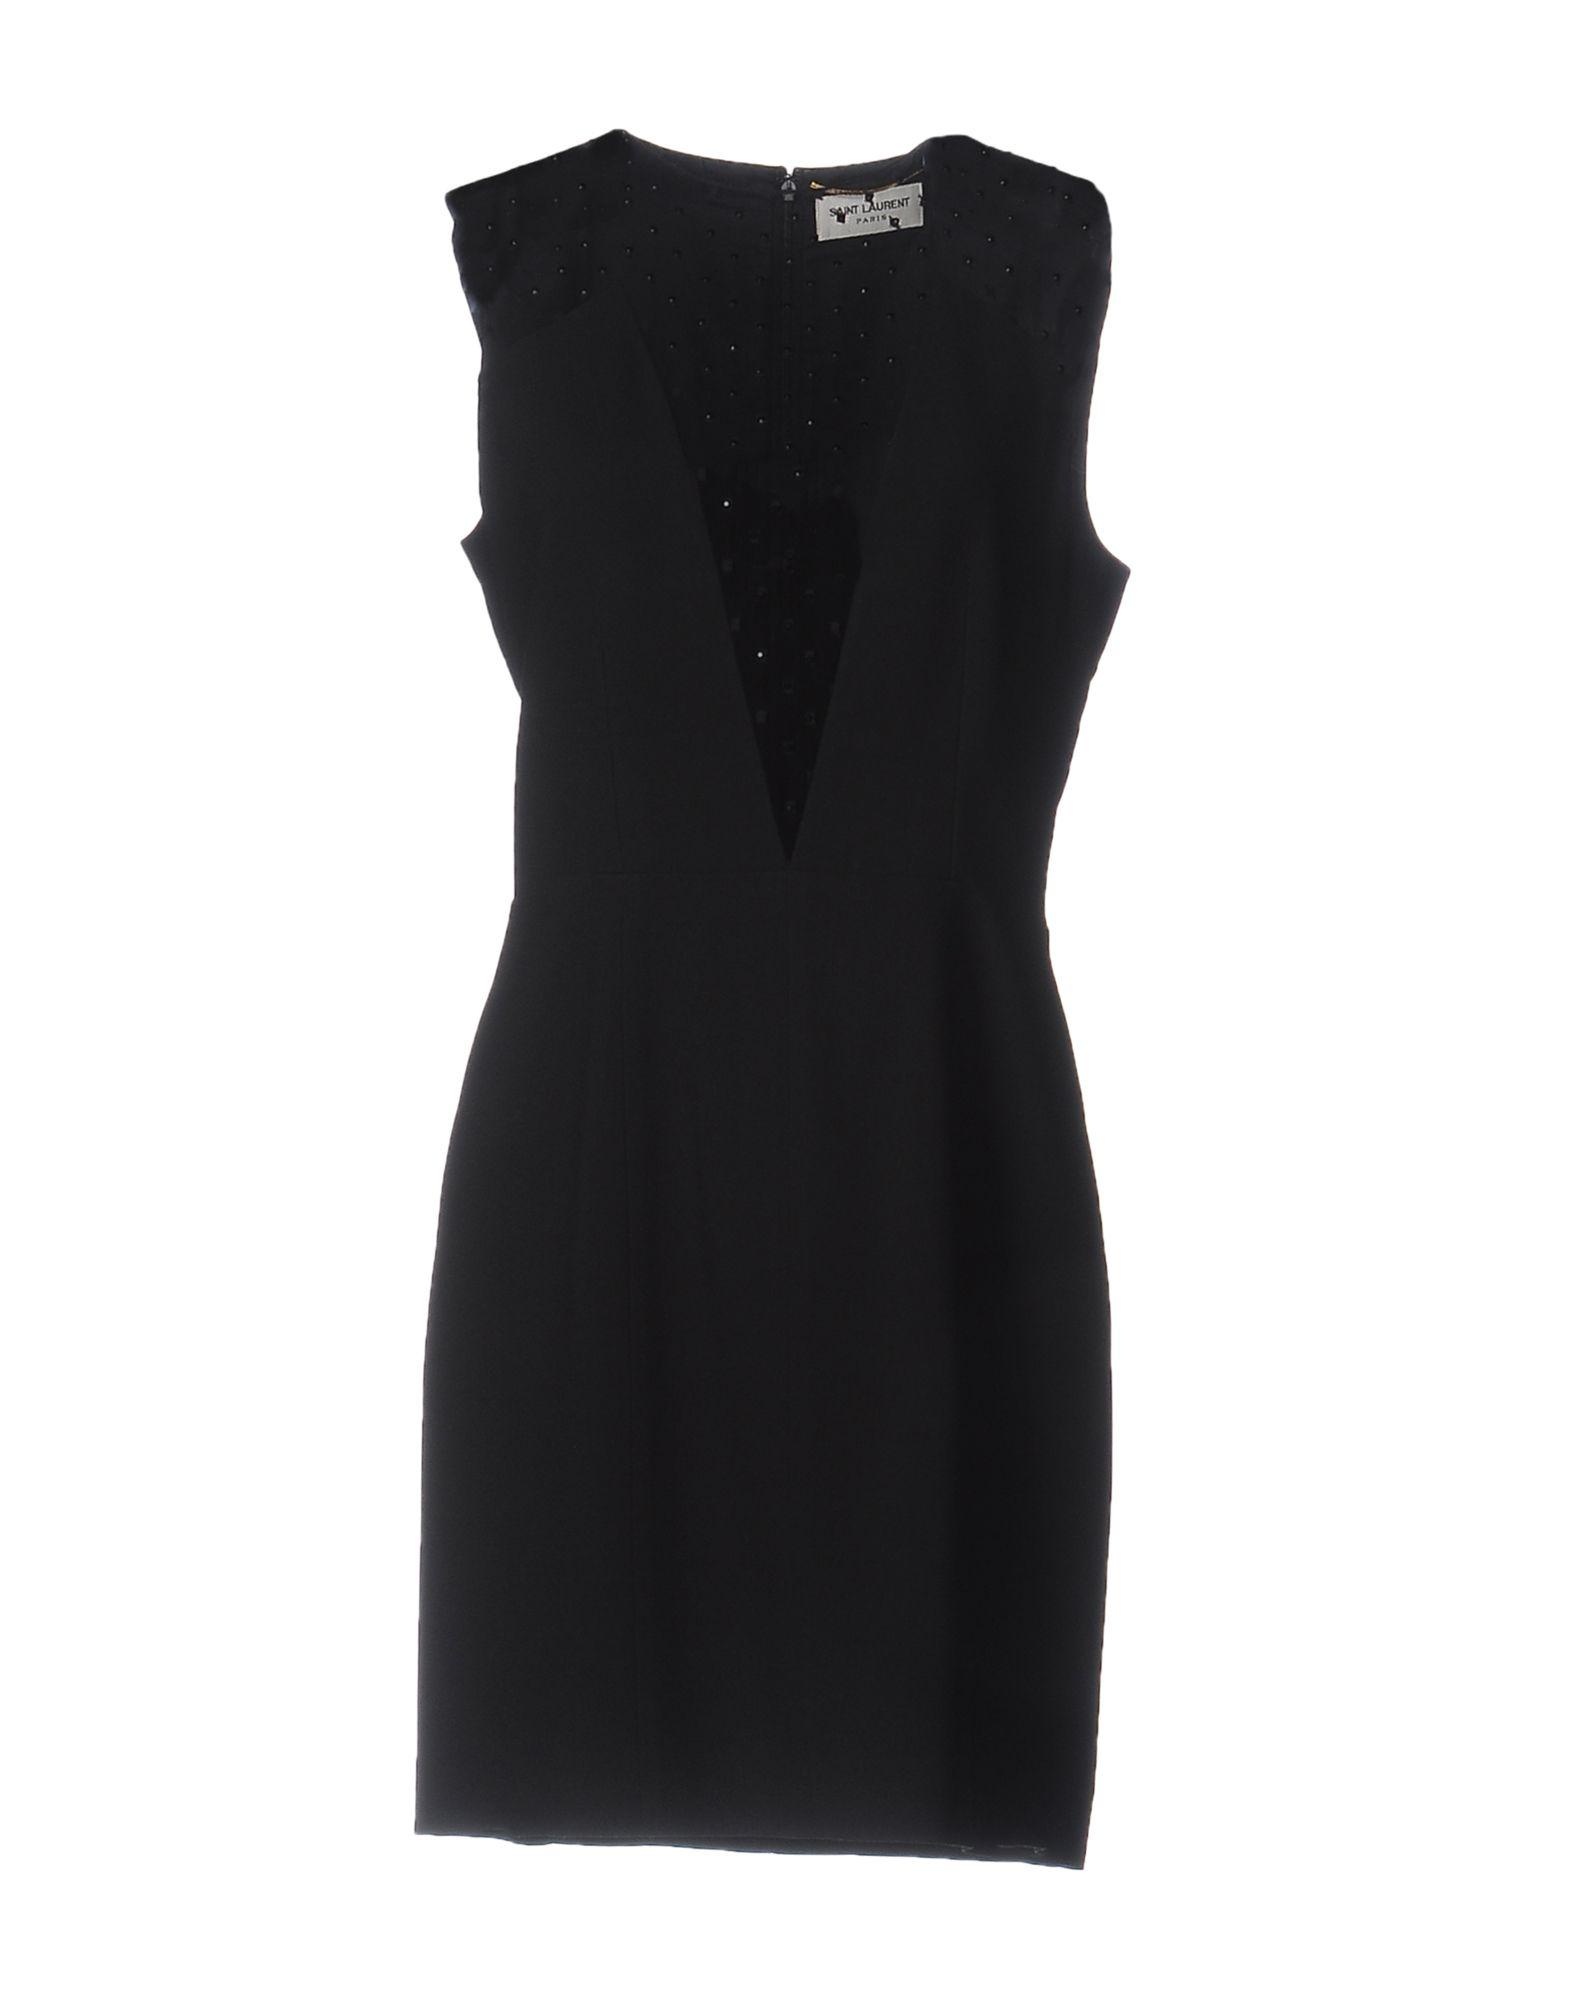 Lyst - Saint laurent Short Dress in Black